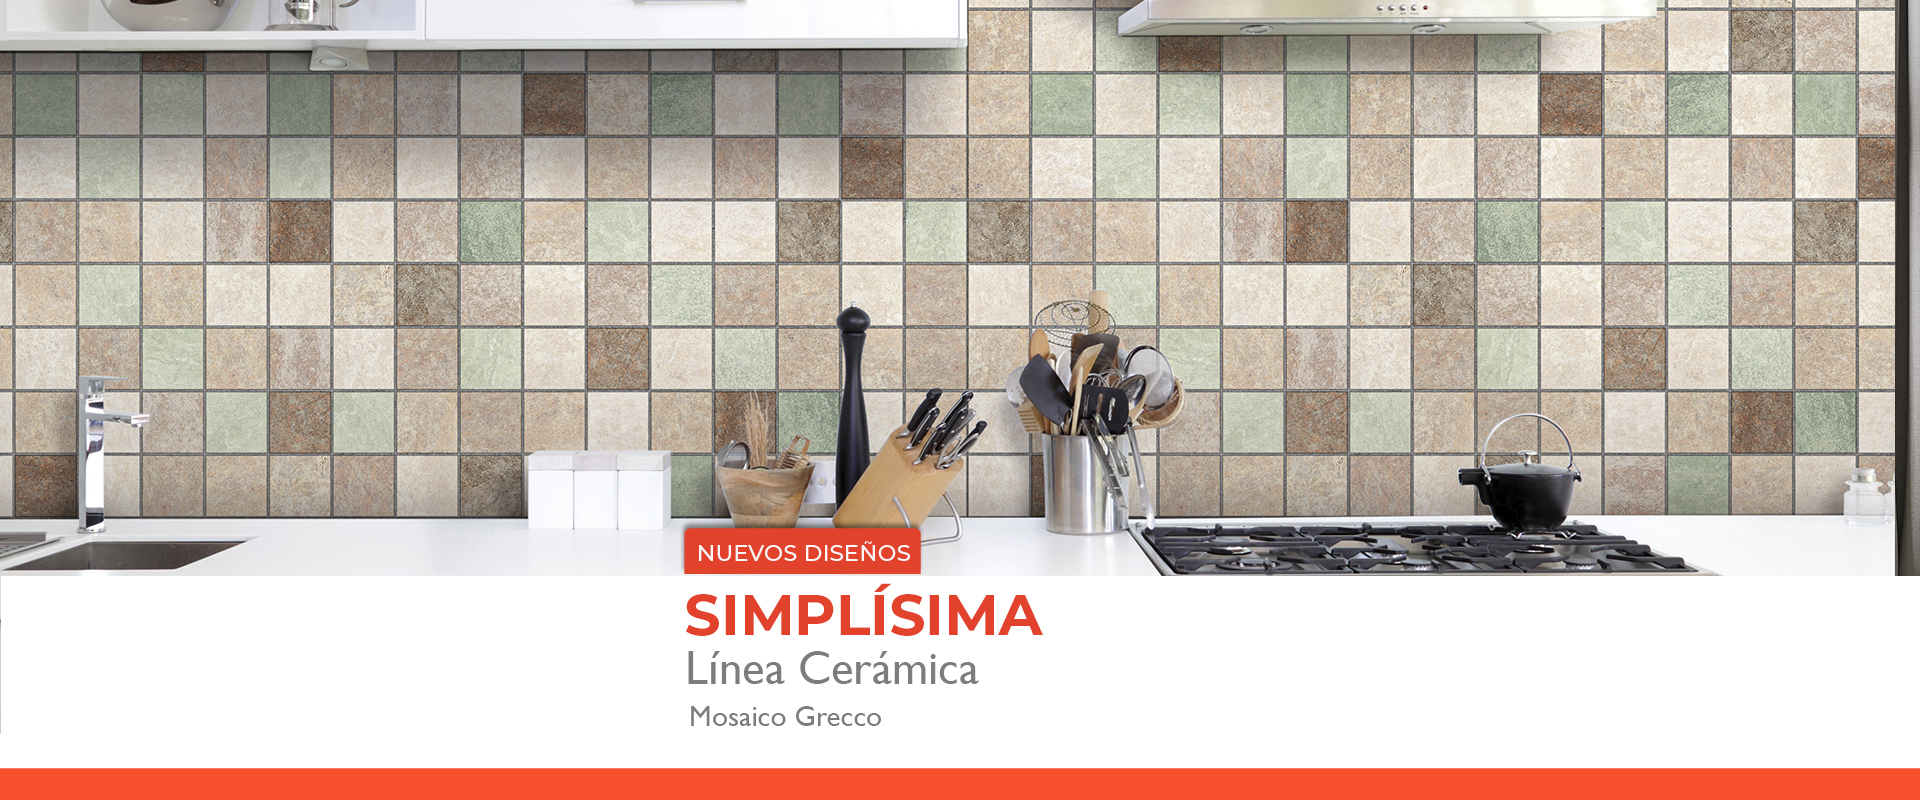 Linea-Ceramica-Mosaico-Grecco.jpg